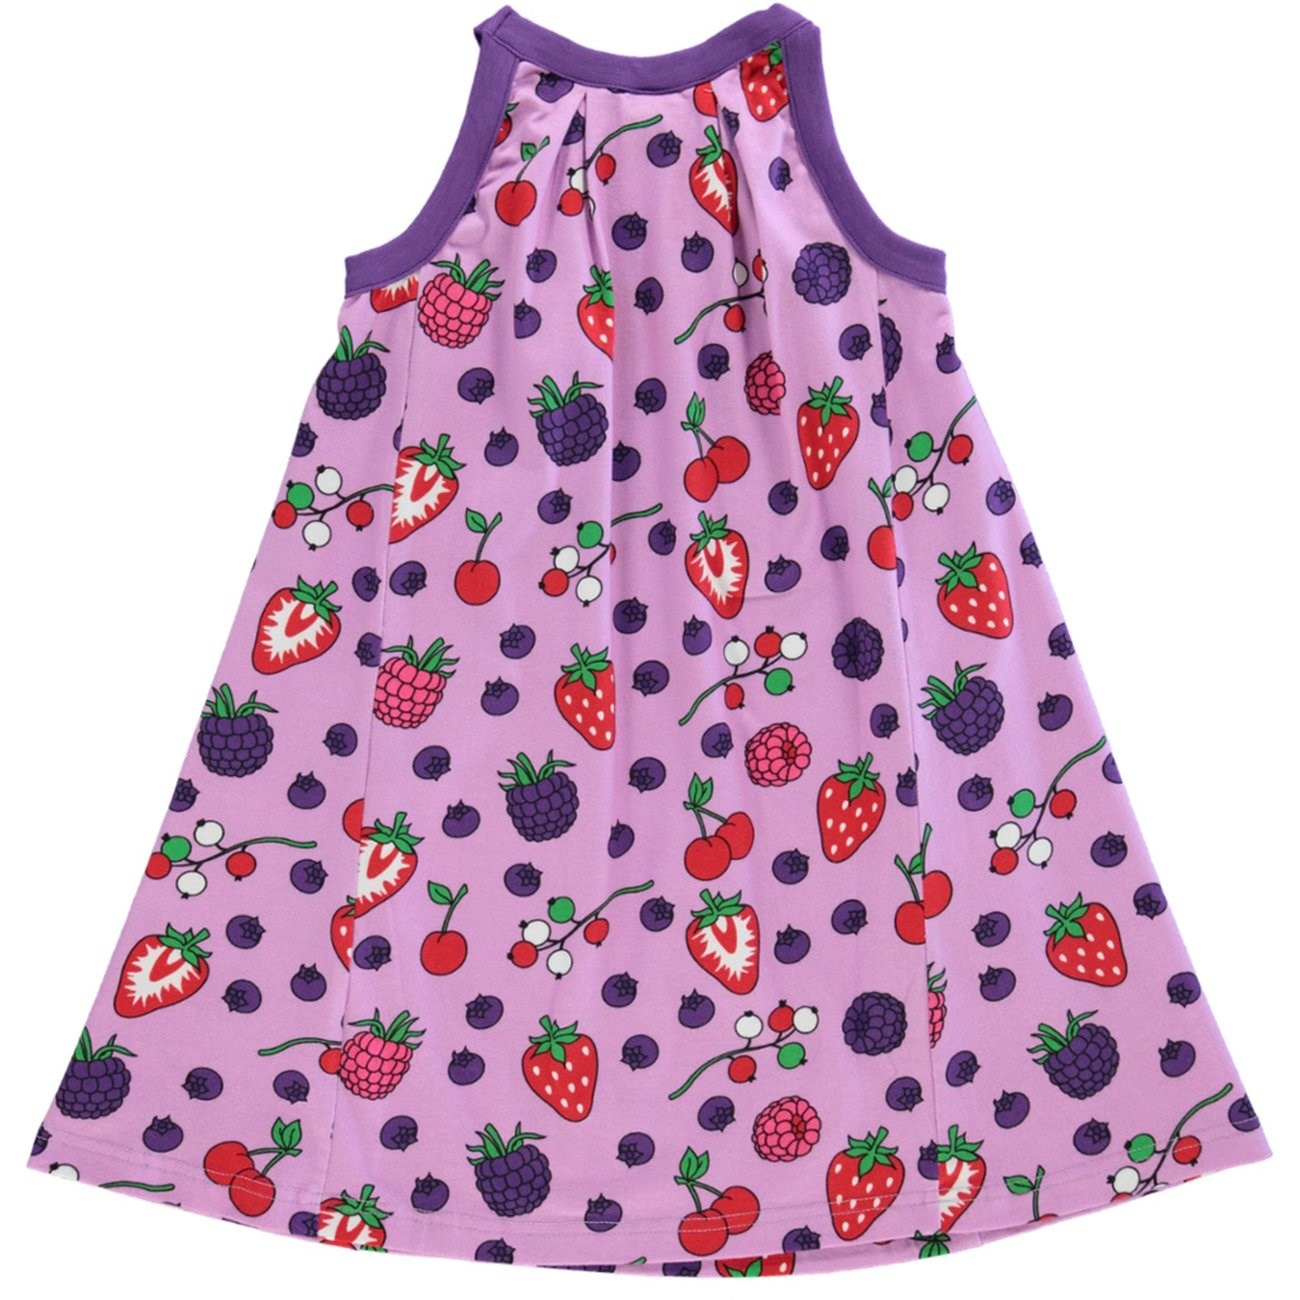 Småfolk Violet Tulle Sleeveless Dress With Berries 4